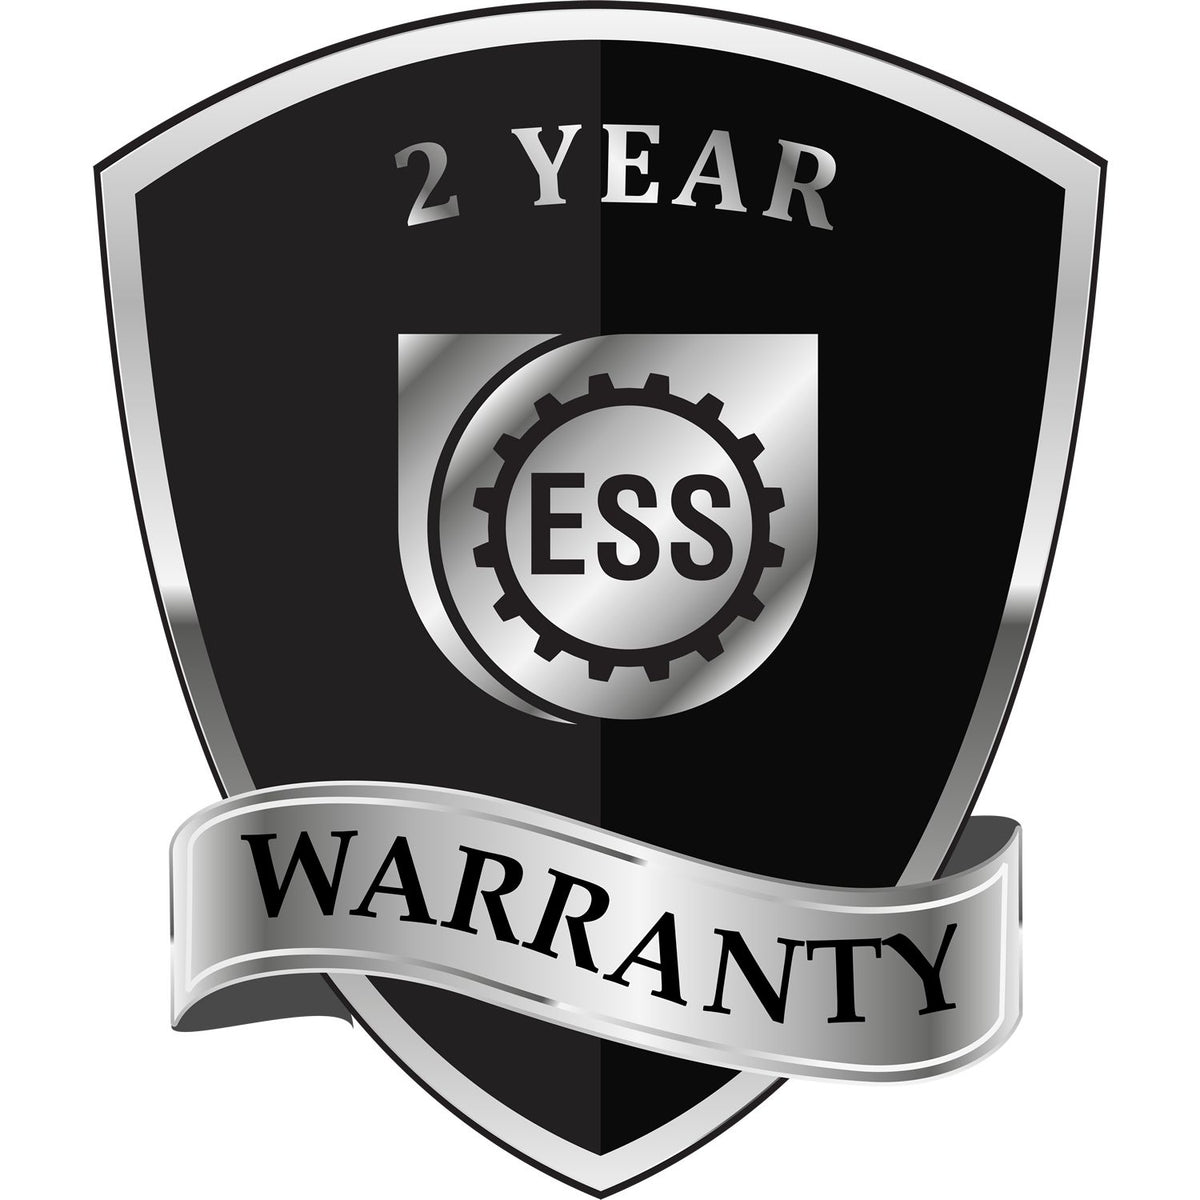 A black and silver badge or emblem showing warranty information for the Hybrid Arizona Land Surveyor Seal